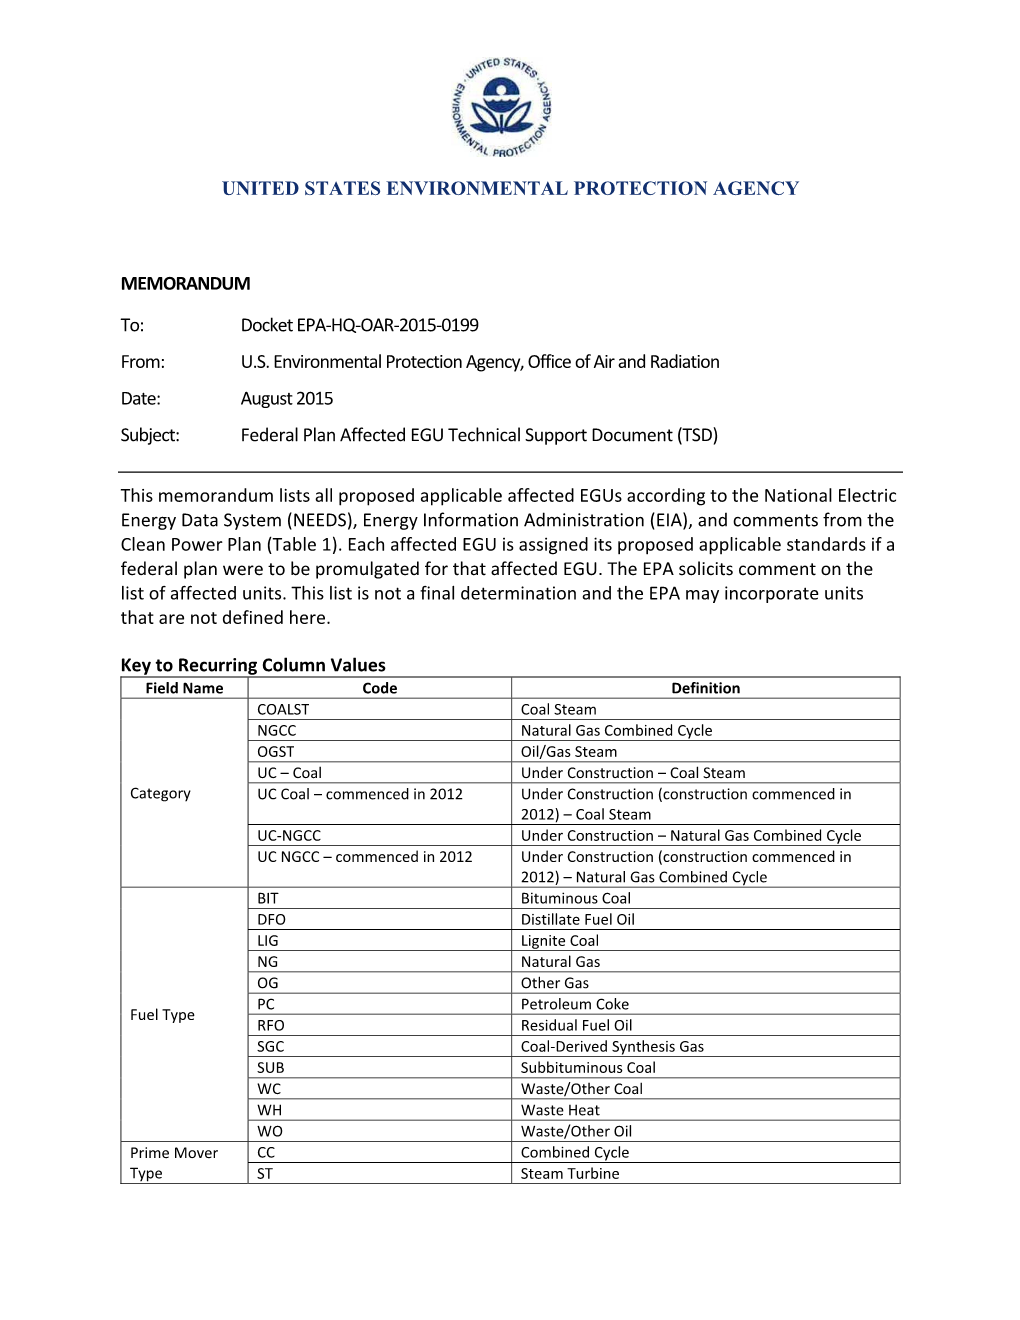 Federal Plan Affected EGU Technical Support Document (TSD)